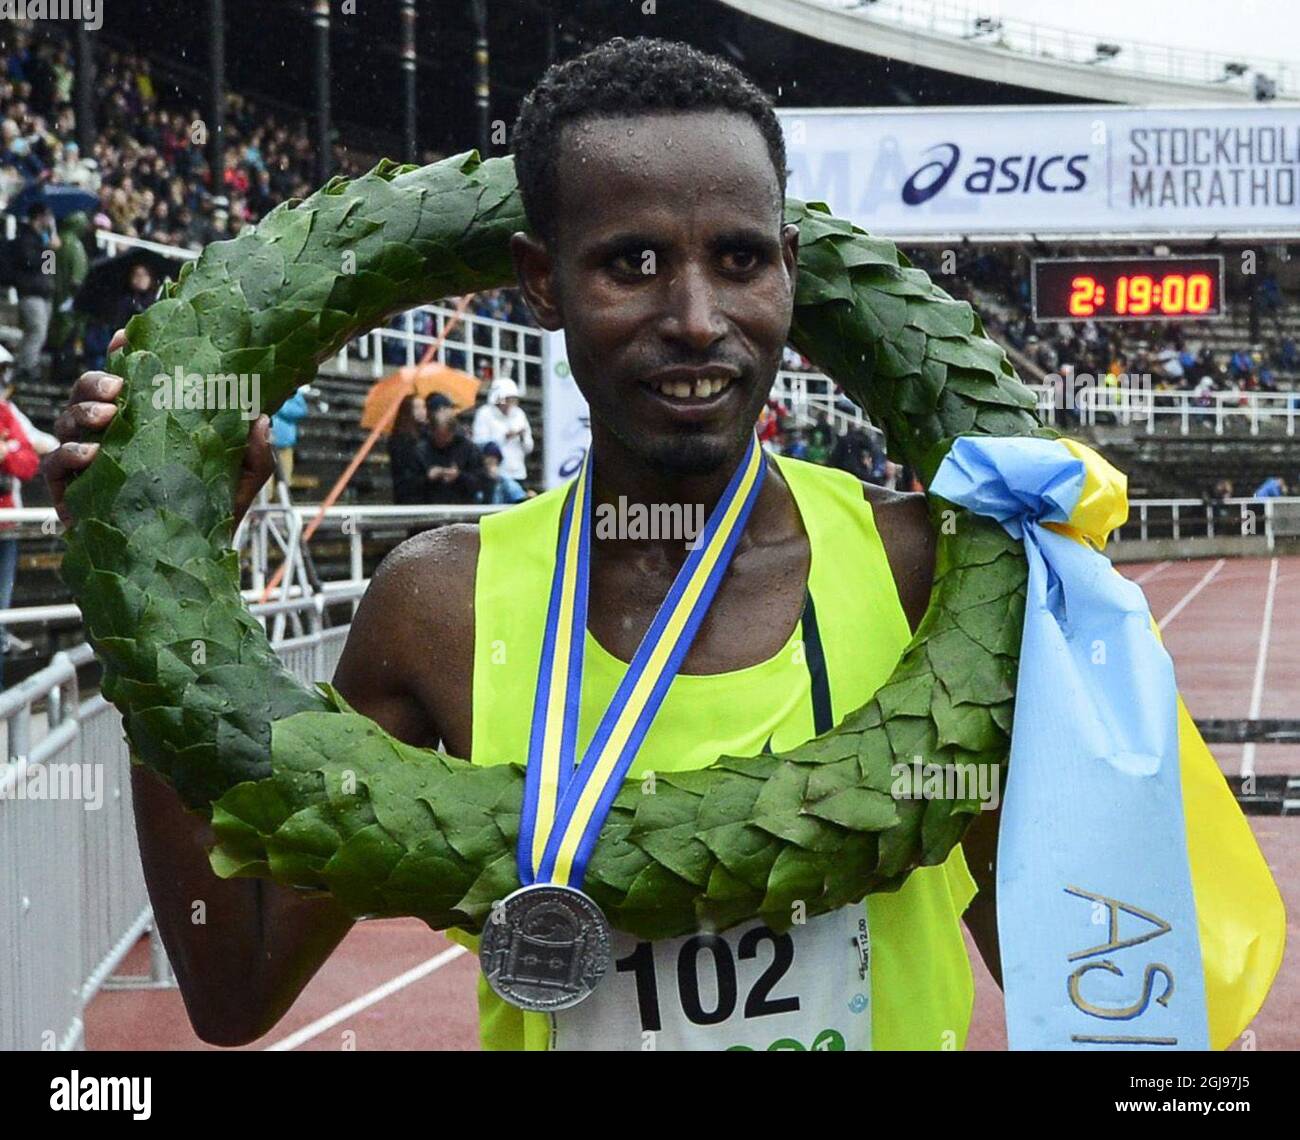 STOCKHOLM 2015-05-30 Ethiopian runner Yekeber Bayabel reacts after winning  the men's Stockholm Marathon in Stockholm, Sweden, May 30, 2015. Bayabel  won Saturdays Marathon in 2 hours 18 minutes and 22 seconds in